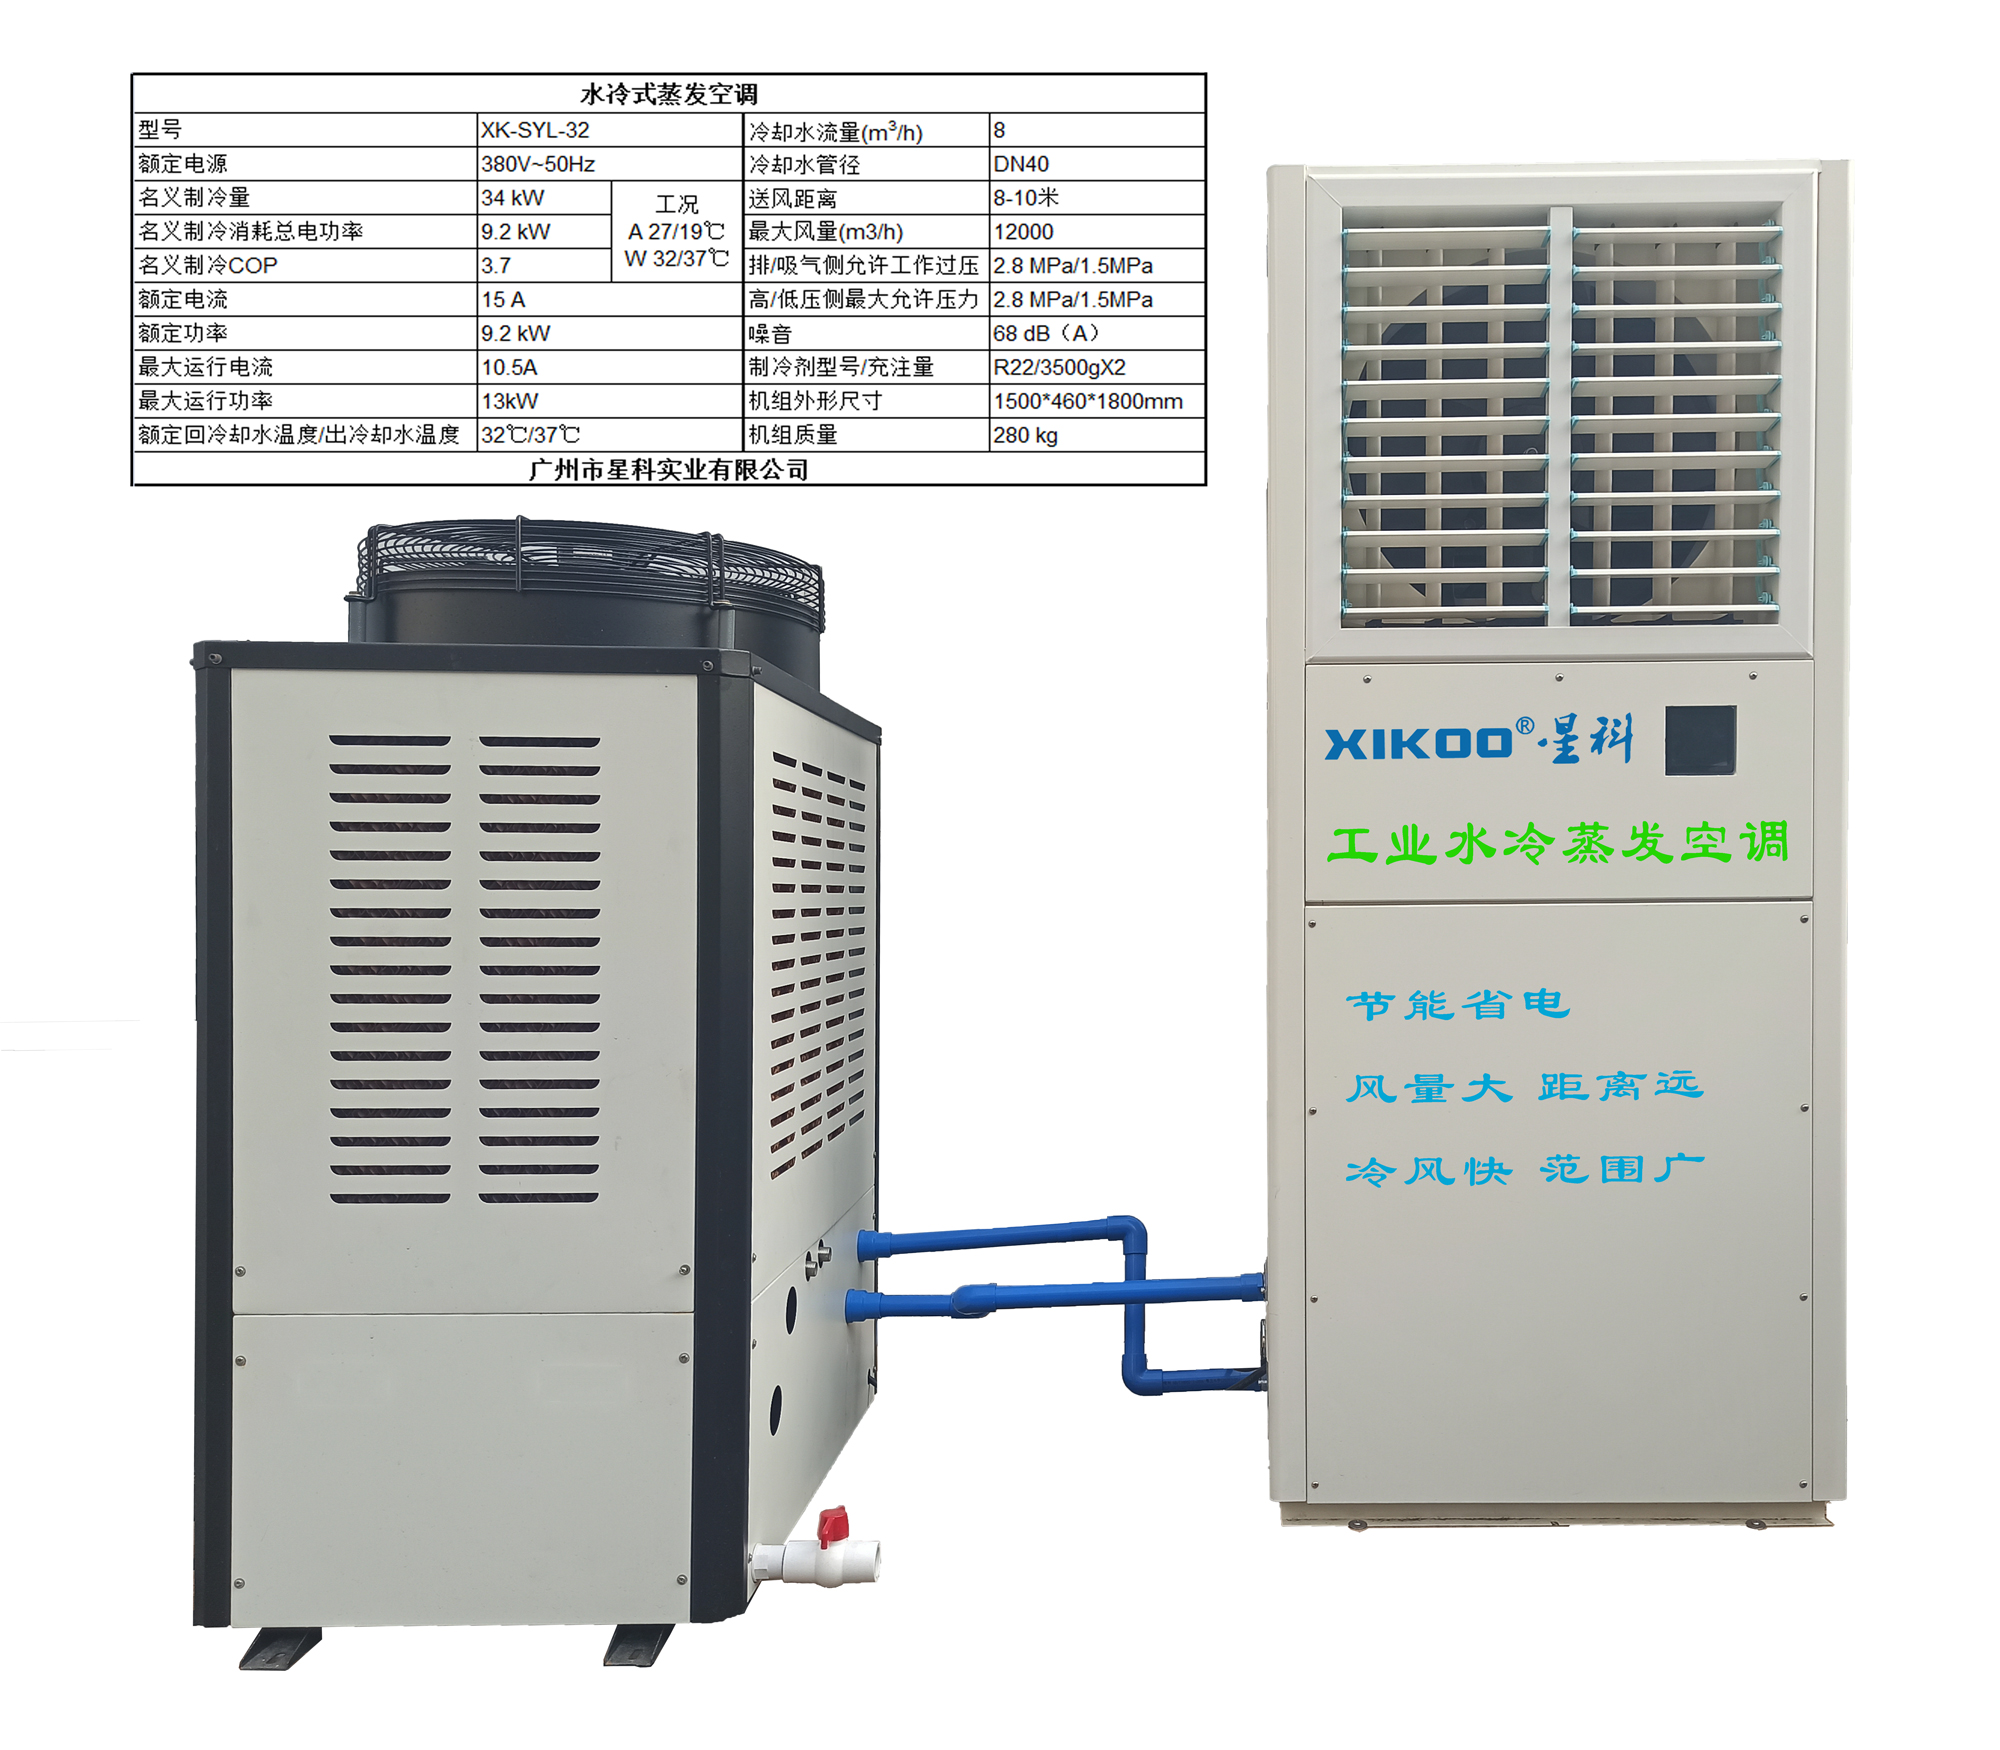 XIKOO new design Evaporative air conditioner